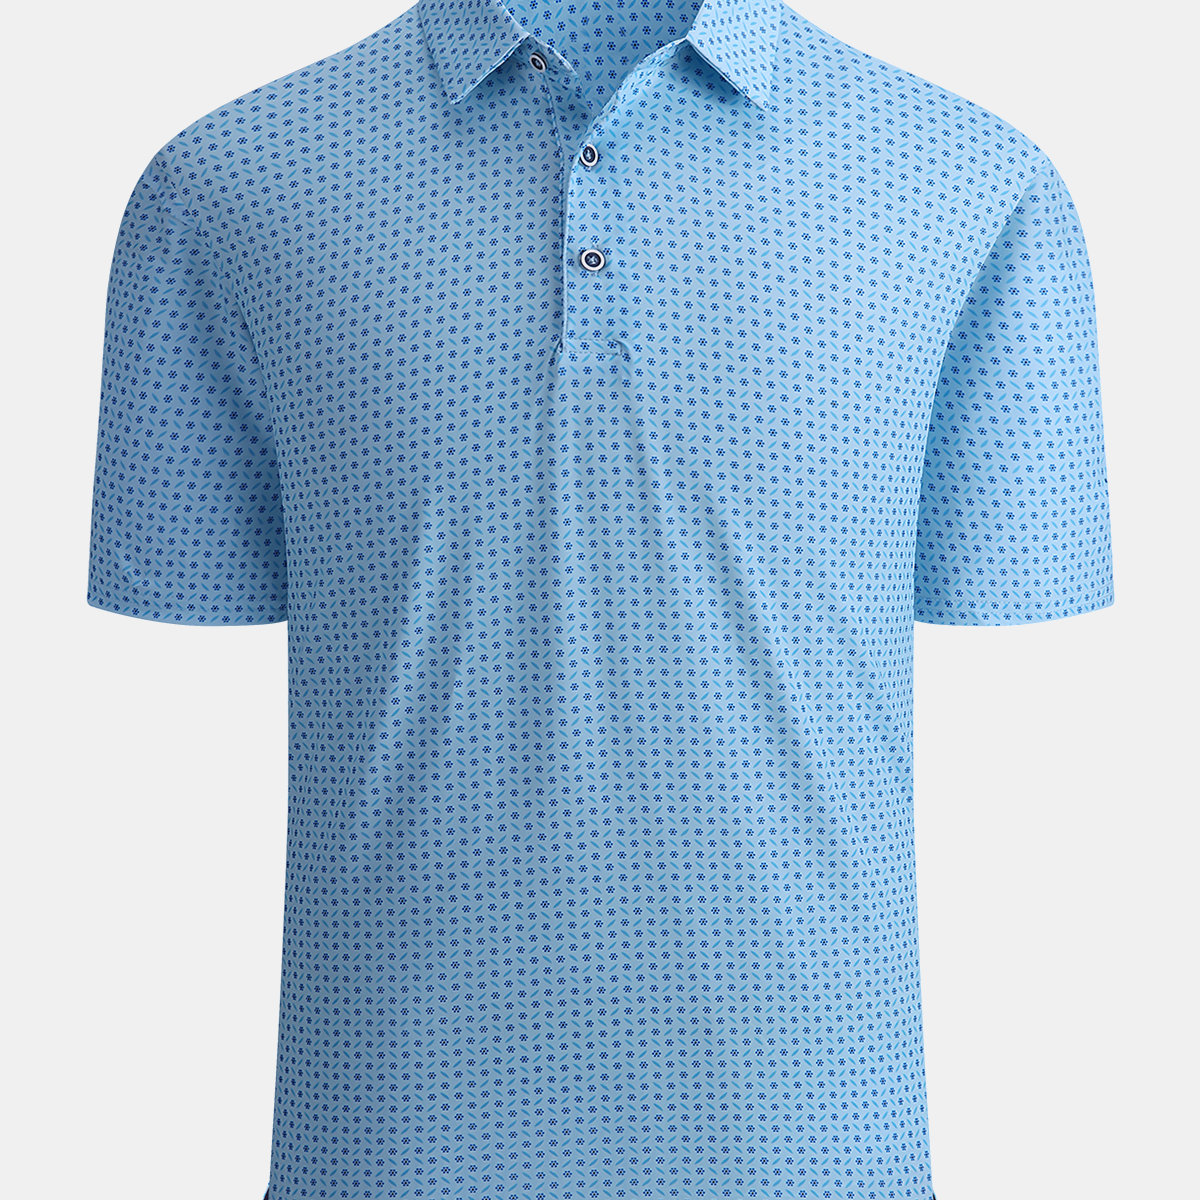 Men's Golf Print Summer Moisture Wicking Sports Casual Short Sleeve Polo Shirt